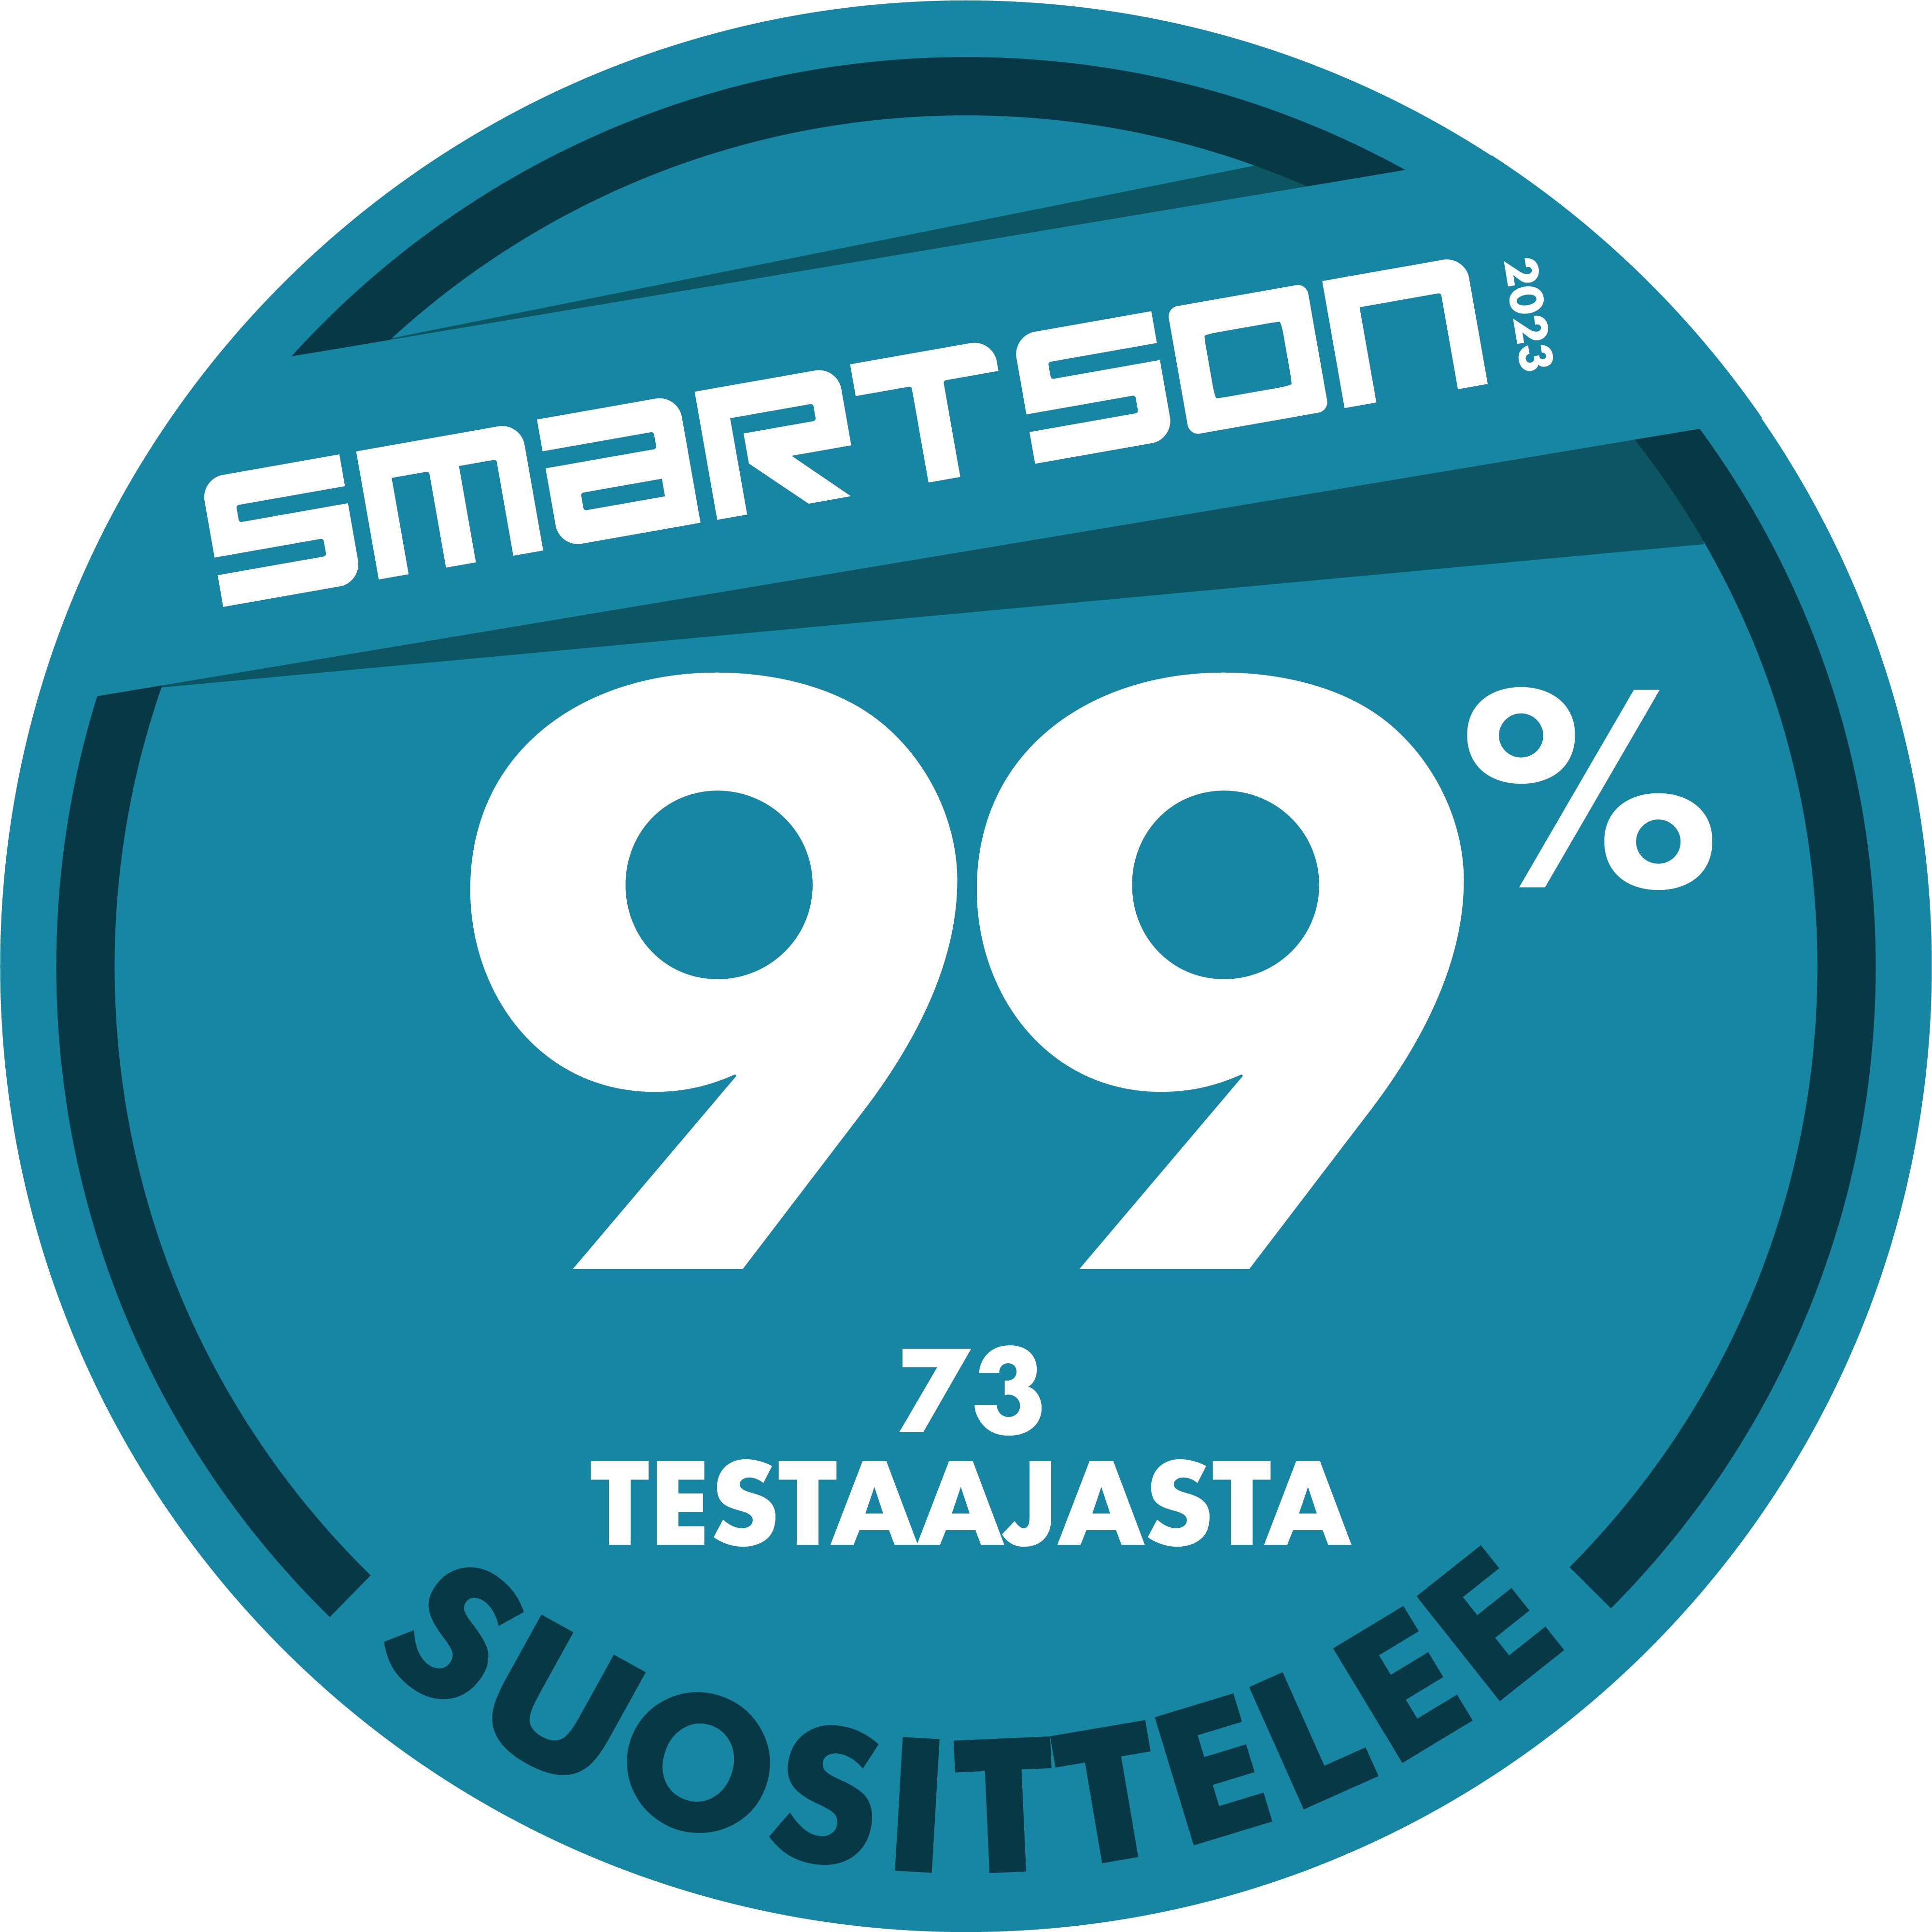 Smartson Badge - 99% 73 Testaajasta